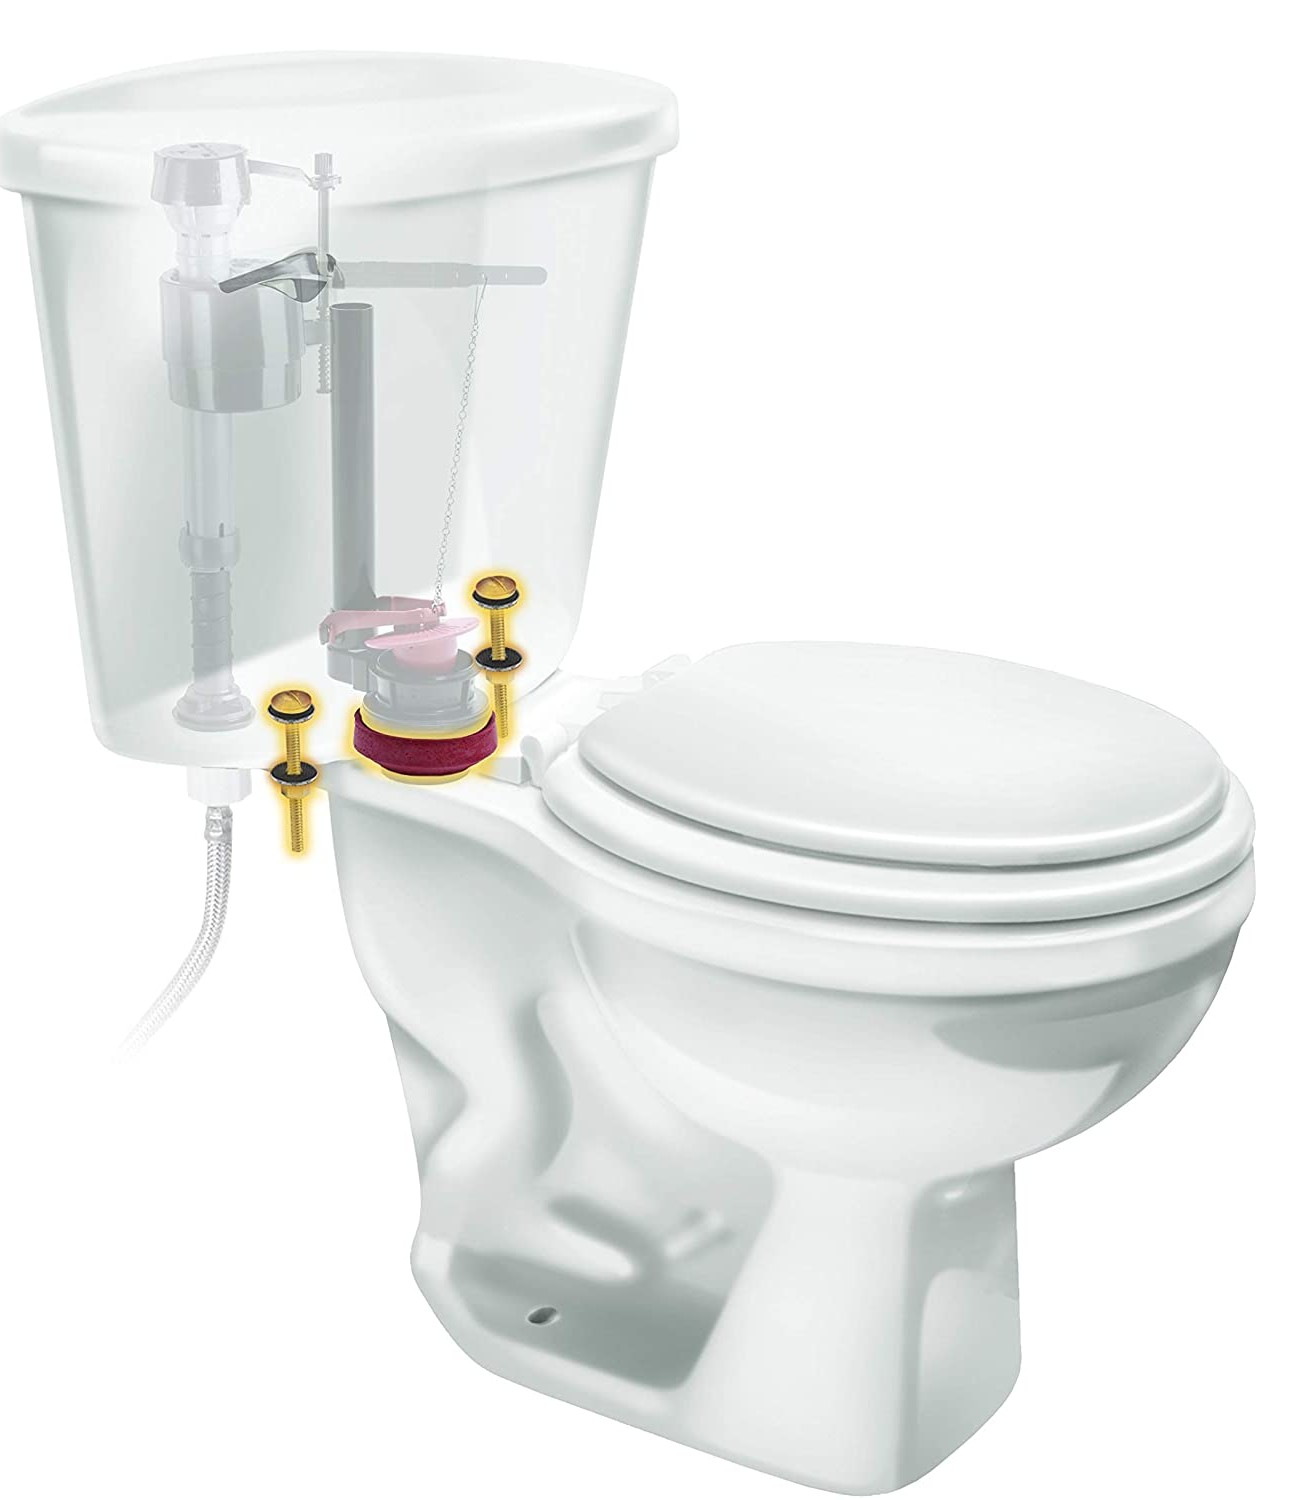 The Best Toilet Repair Kits Options